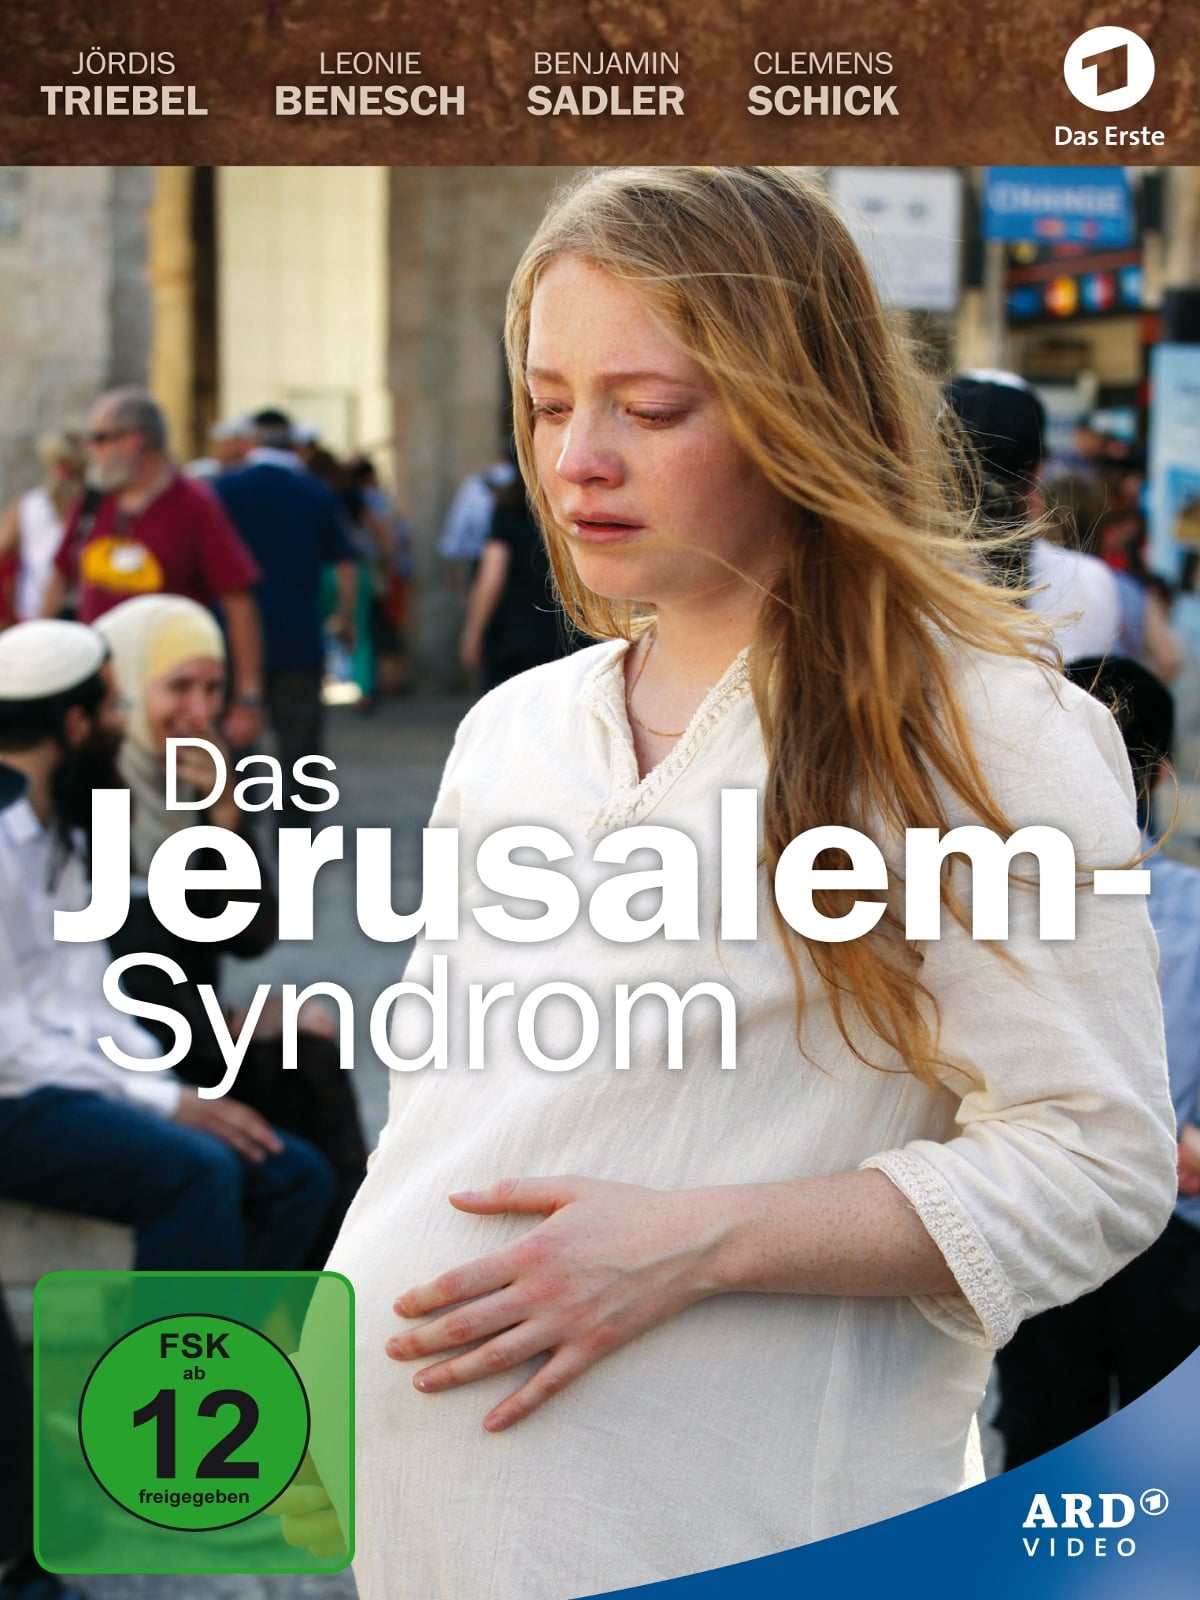 El síndrome de Jerusalem